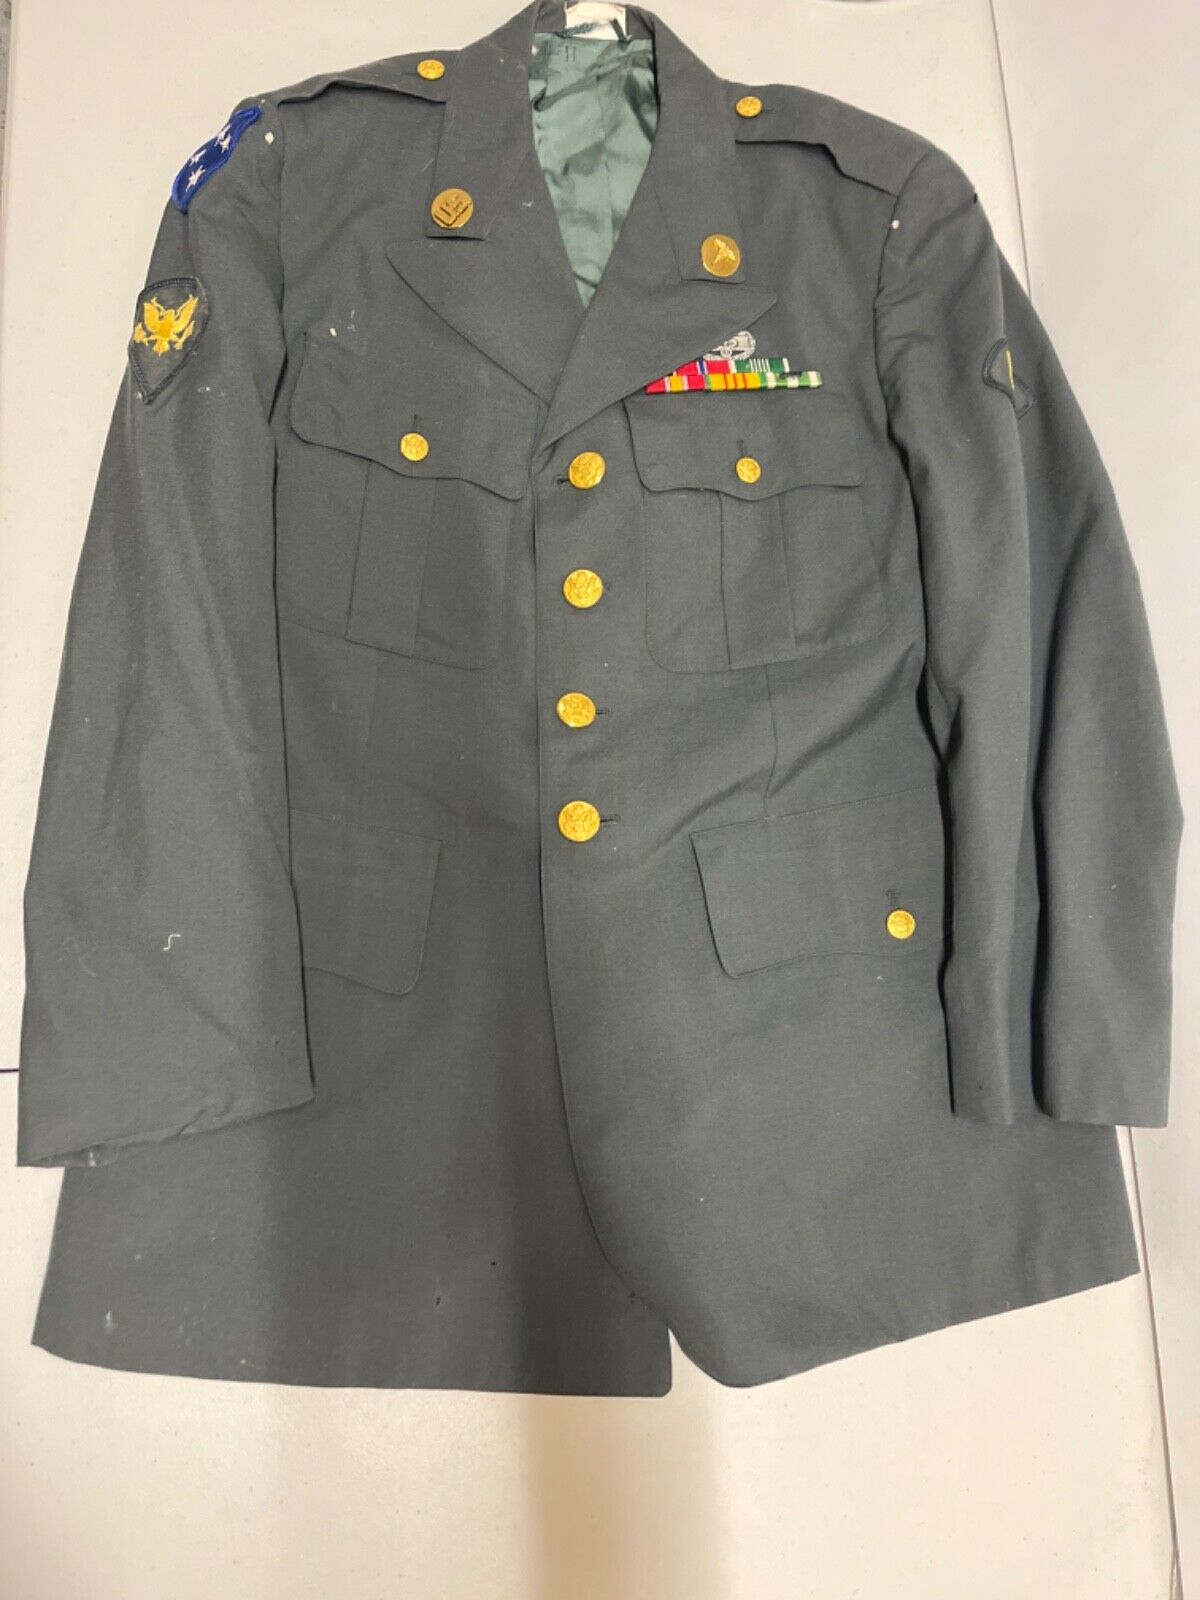 Vintage Army Uniform Jacket 38 S 8405-965-1614-Medic Pins